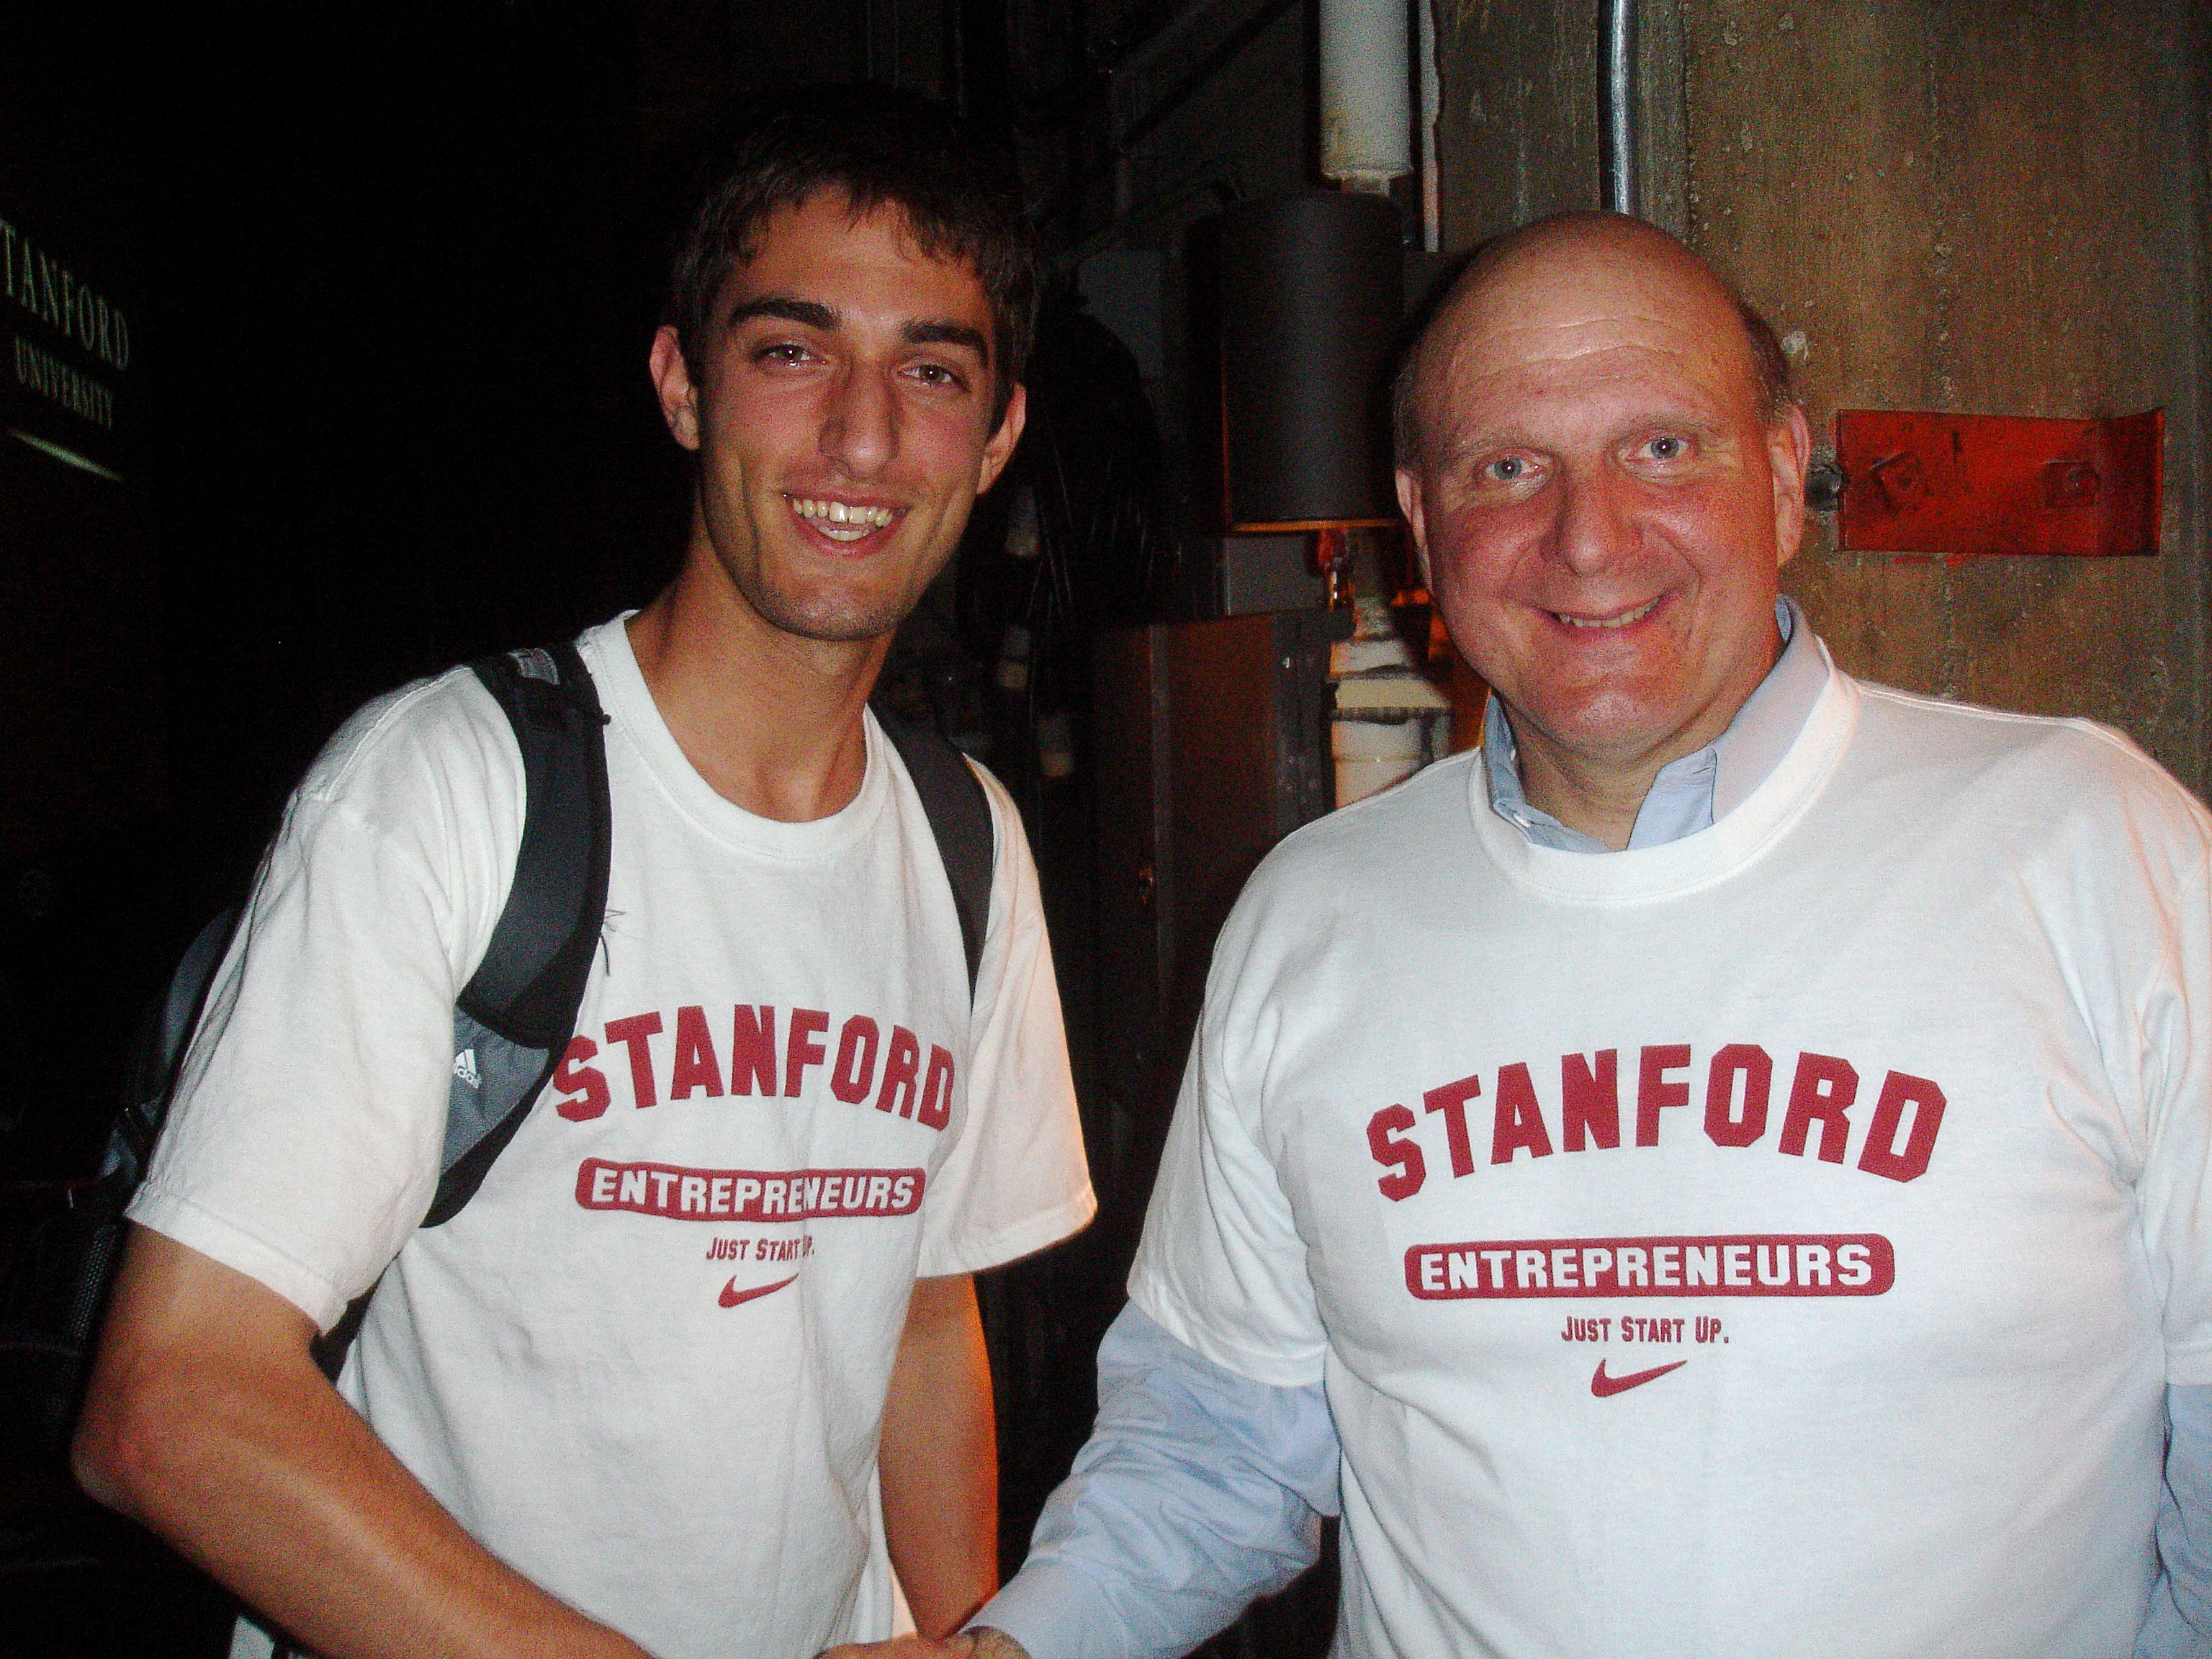 Meeting Steve Ballmer, Microsoft CEO at Stanford University